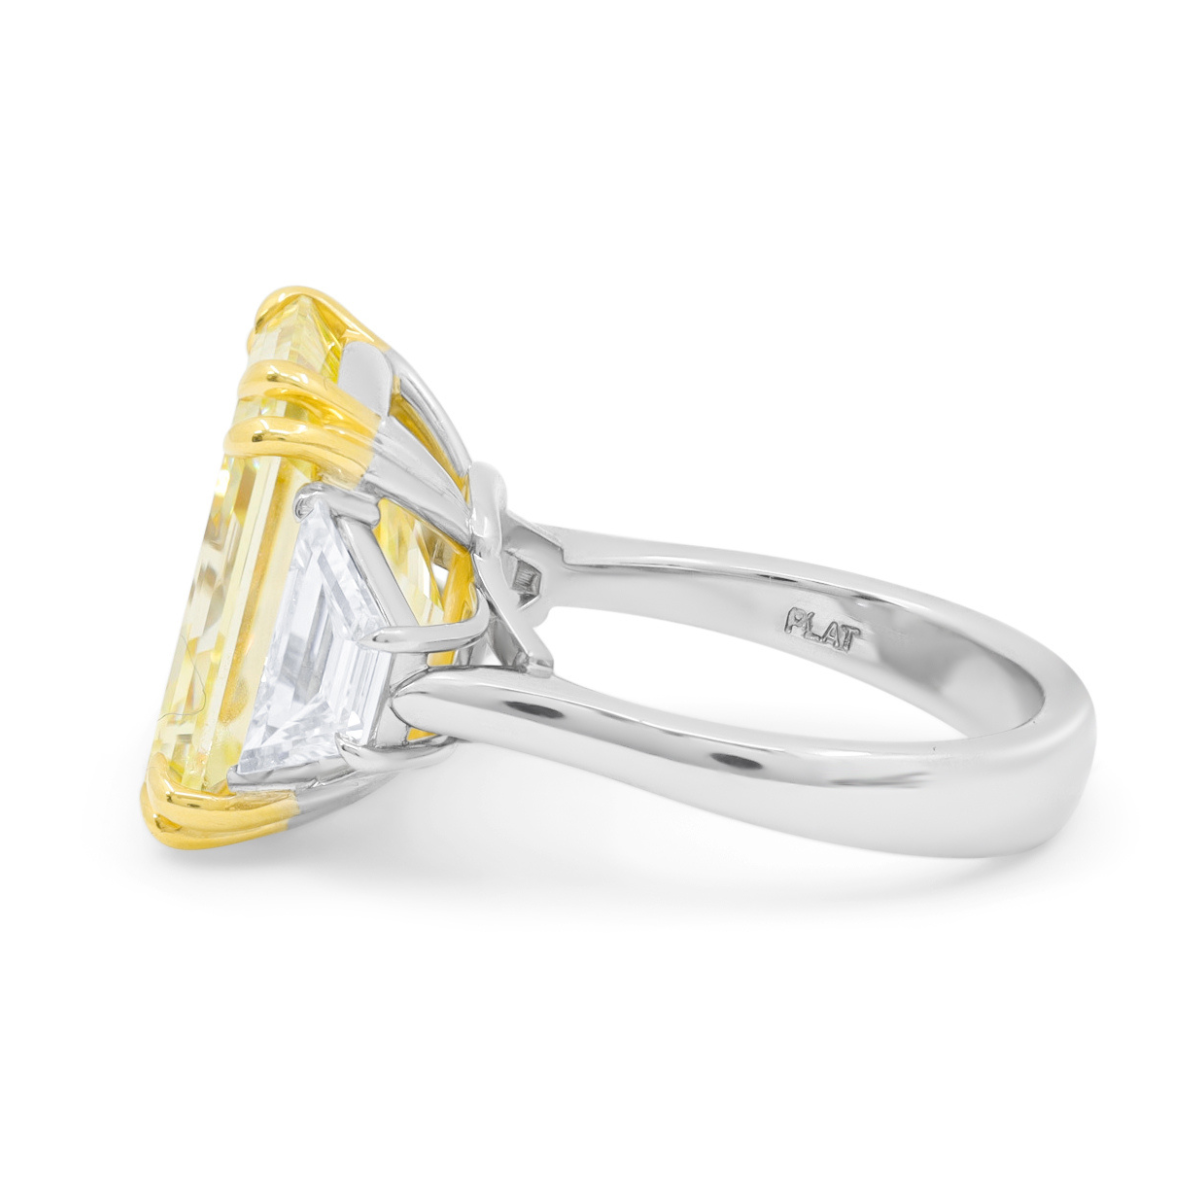 12.27cts Fancy Yellow Emerald Cut Diamond Ring